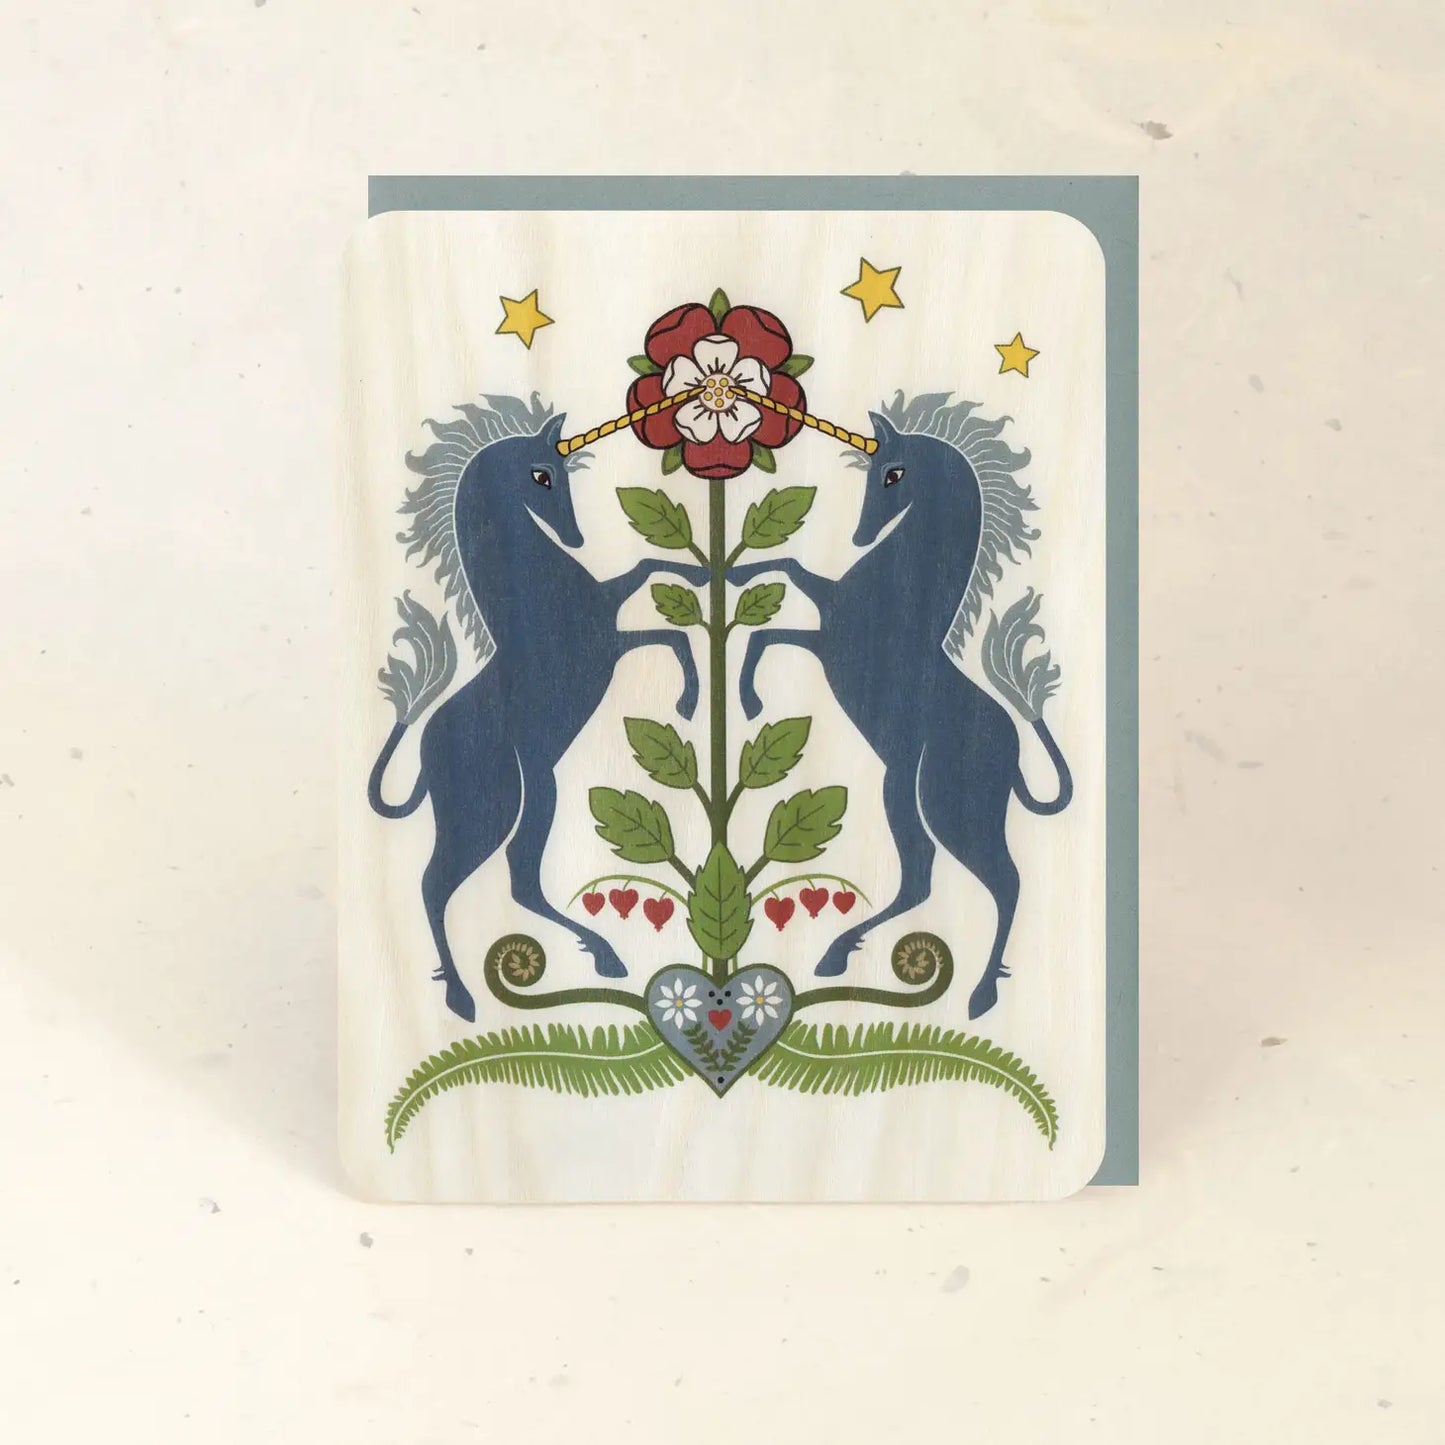 Wood Veneer Greeting Cards by Little Gold Fox Designs